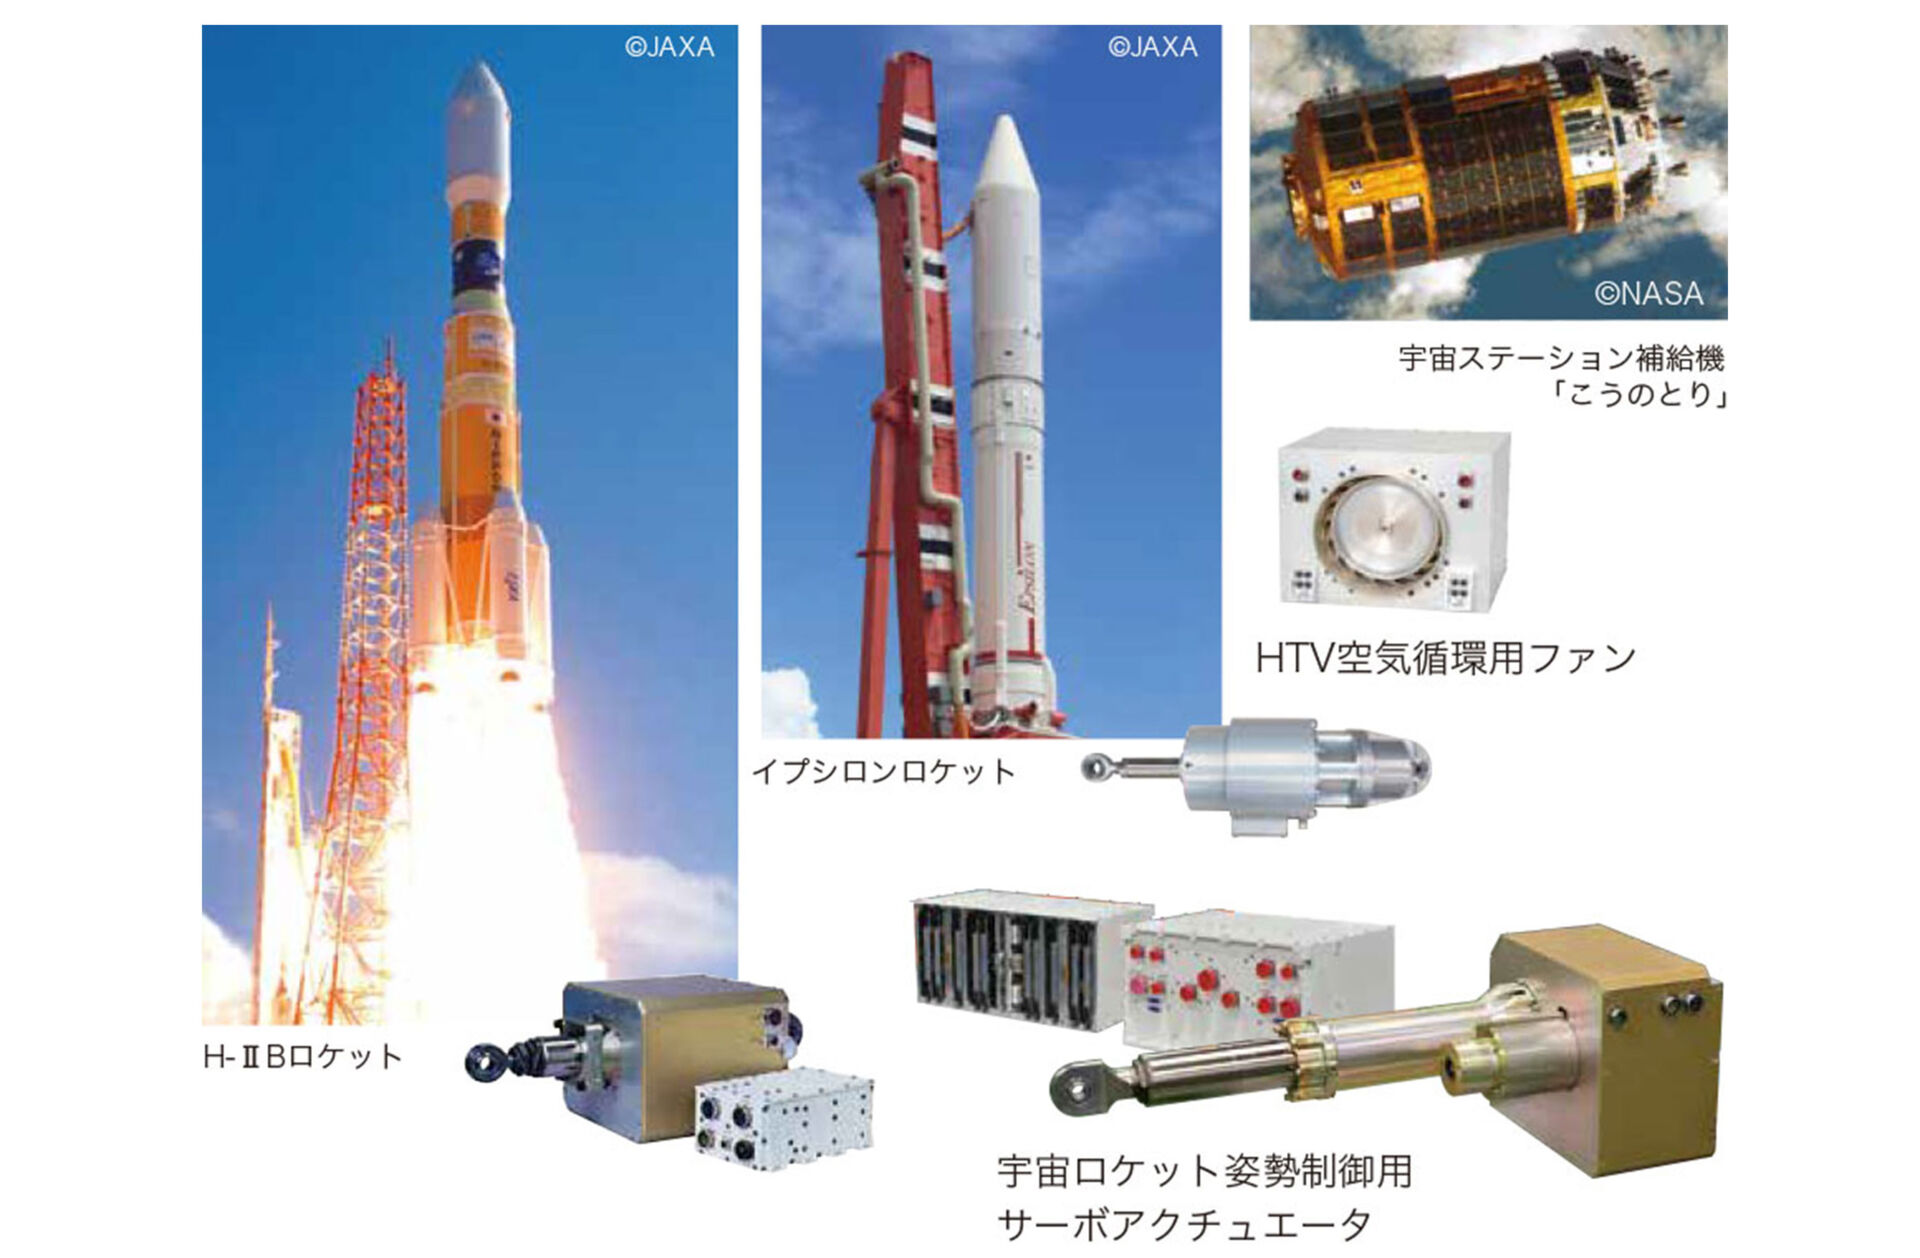 H-IIBロケット、イプシロンロケット、宇宙ステーション補給機「こうのとり」、HTV空気循環用ファン、宇宙ロケット姿勢制御用サーボアクチュエータ